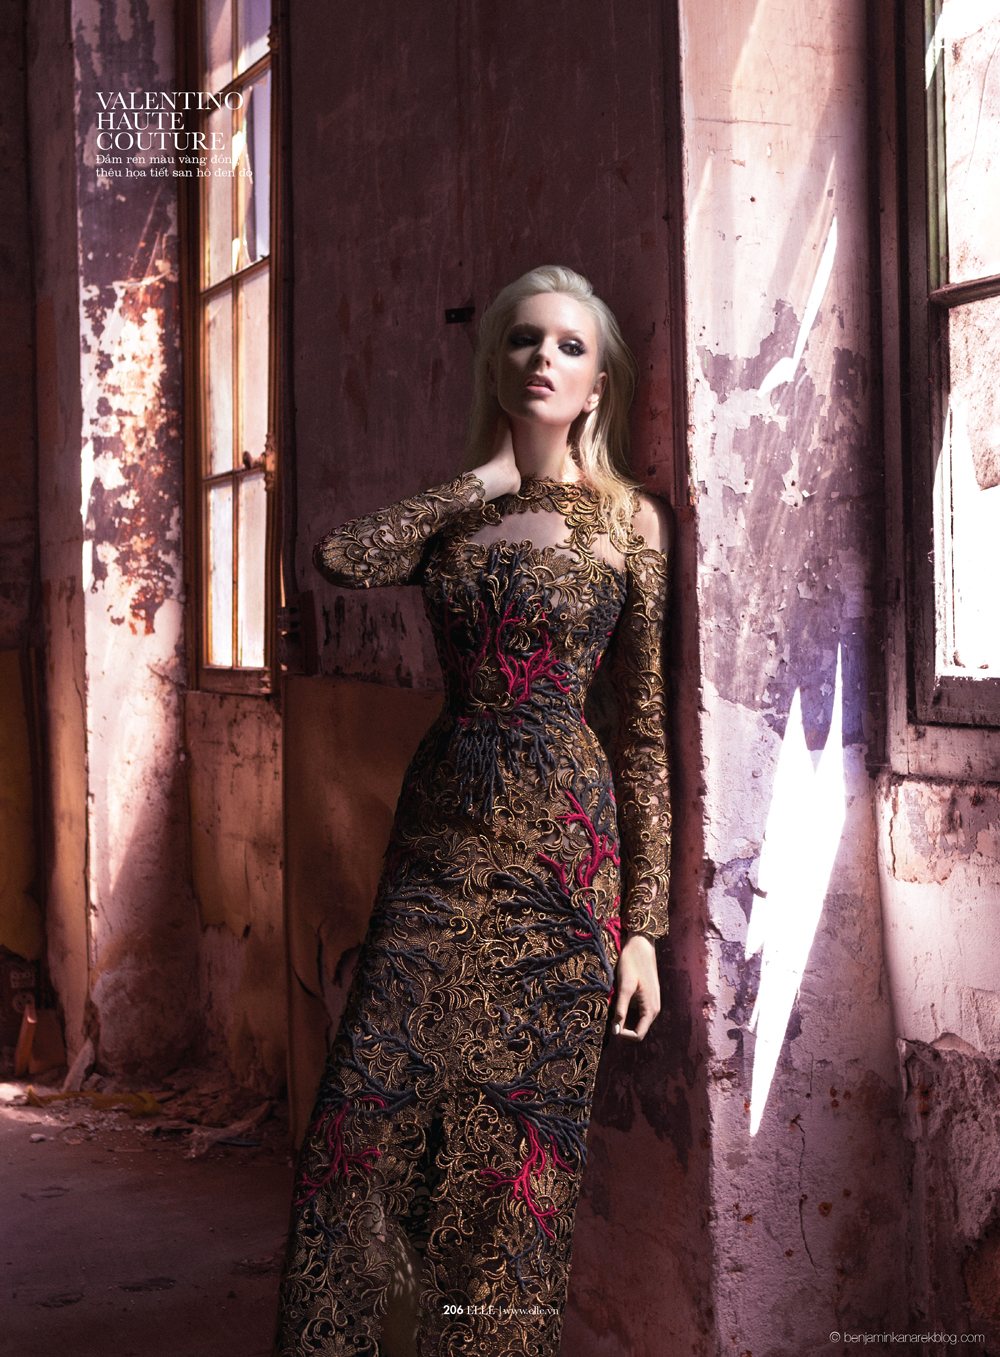 Chrystal Copland in Valentino Haute Couture © Benjamin Kanarek